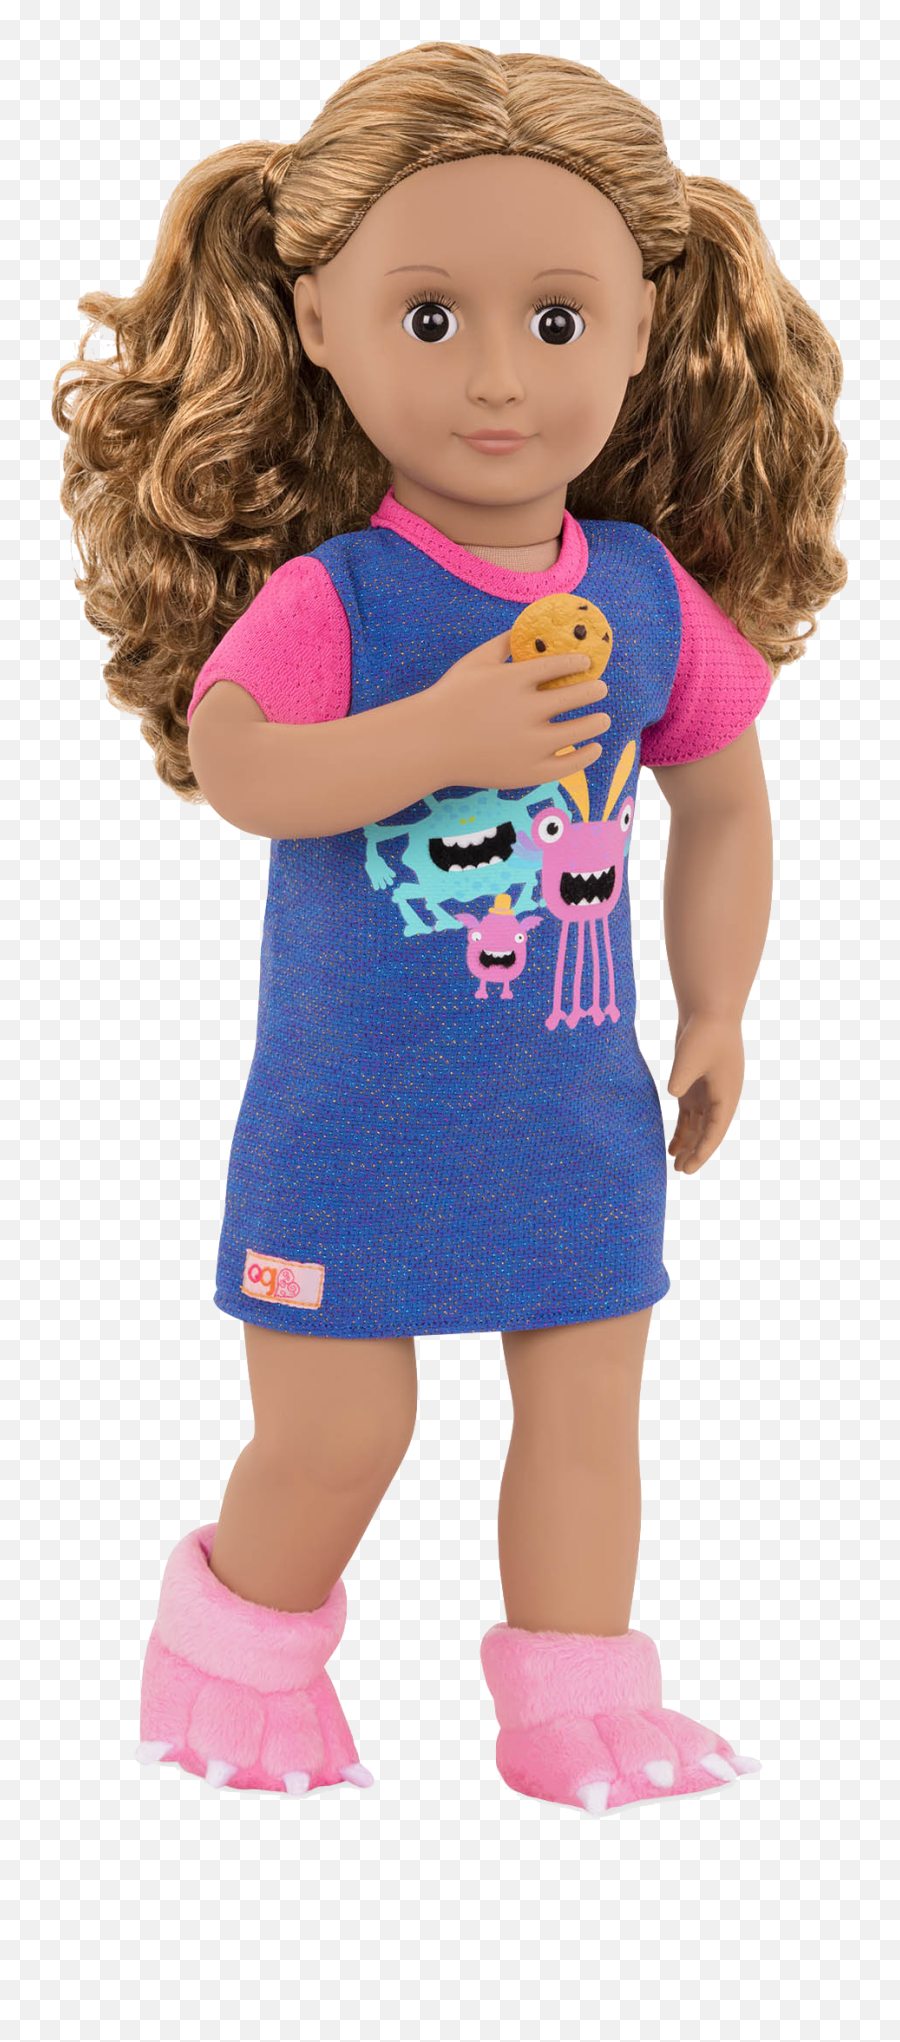 Snuggle Monster - Pajamas Our Generation Dolls Emoji,Emoji Doll Outfit